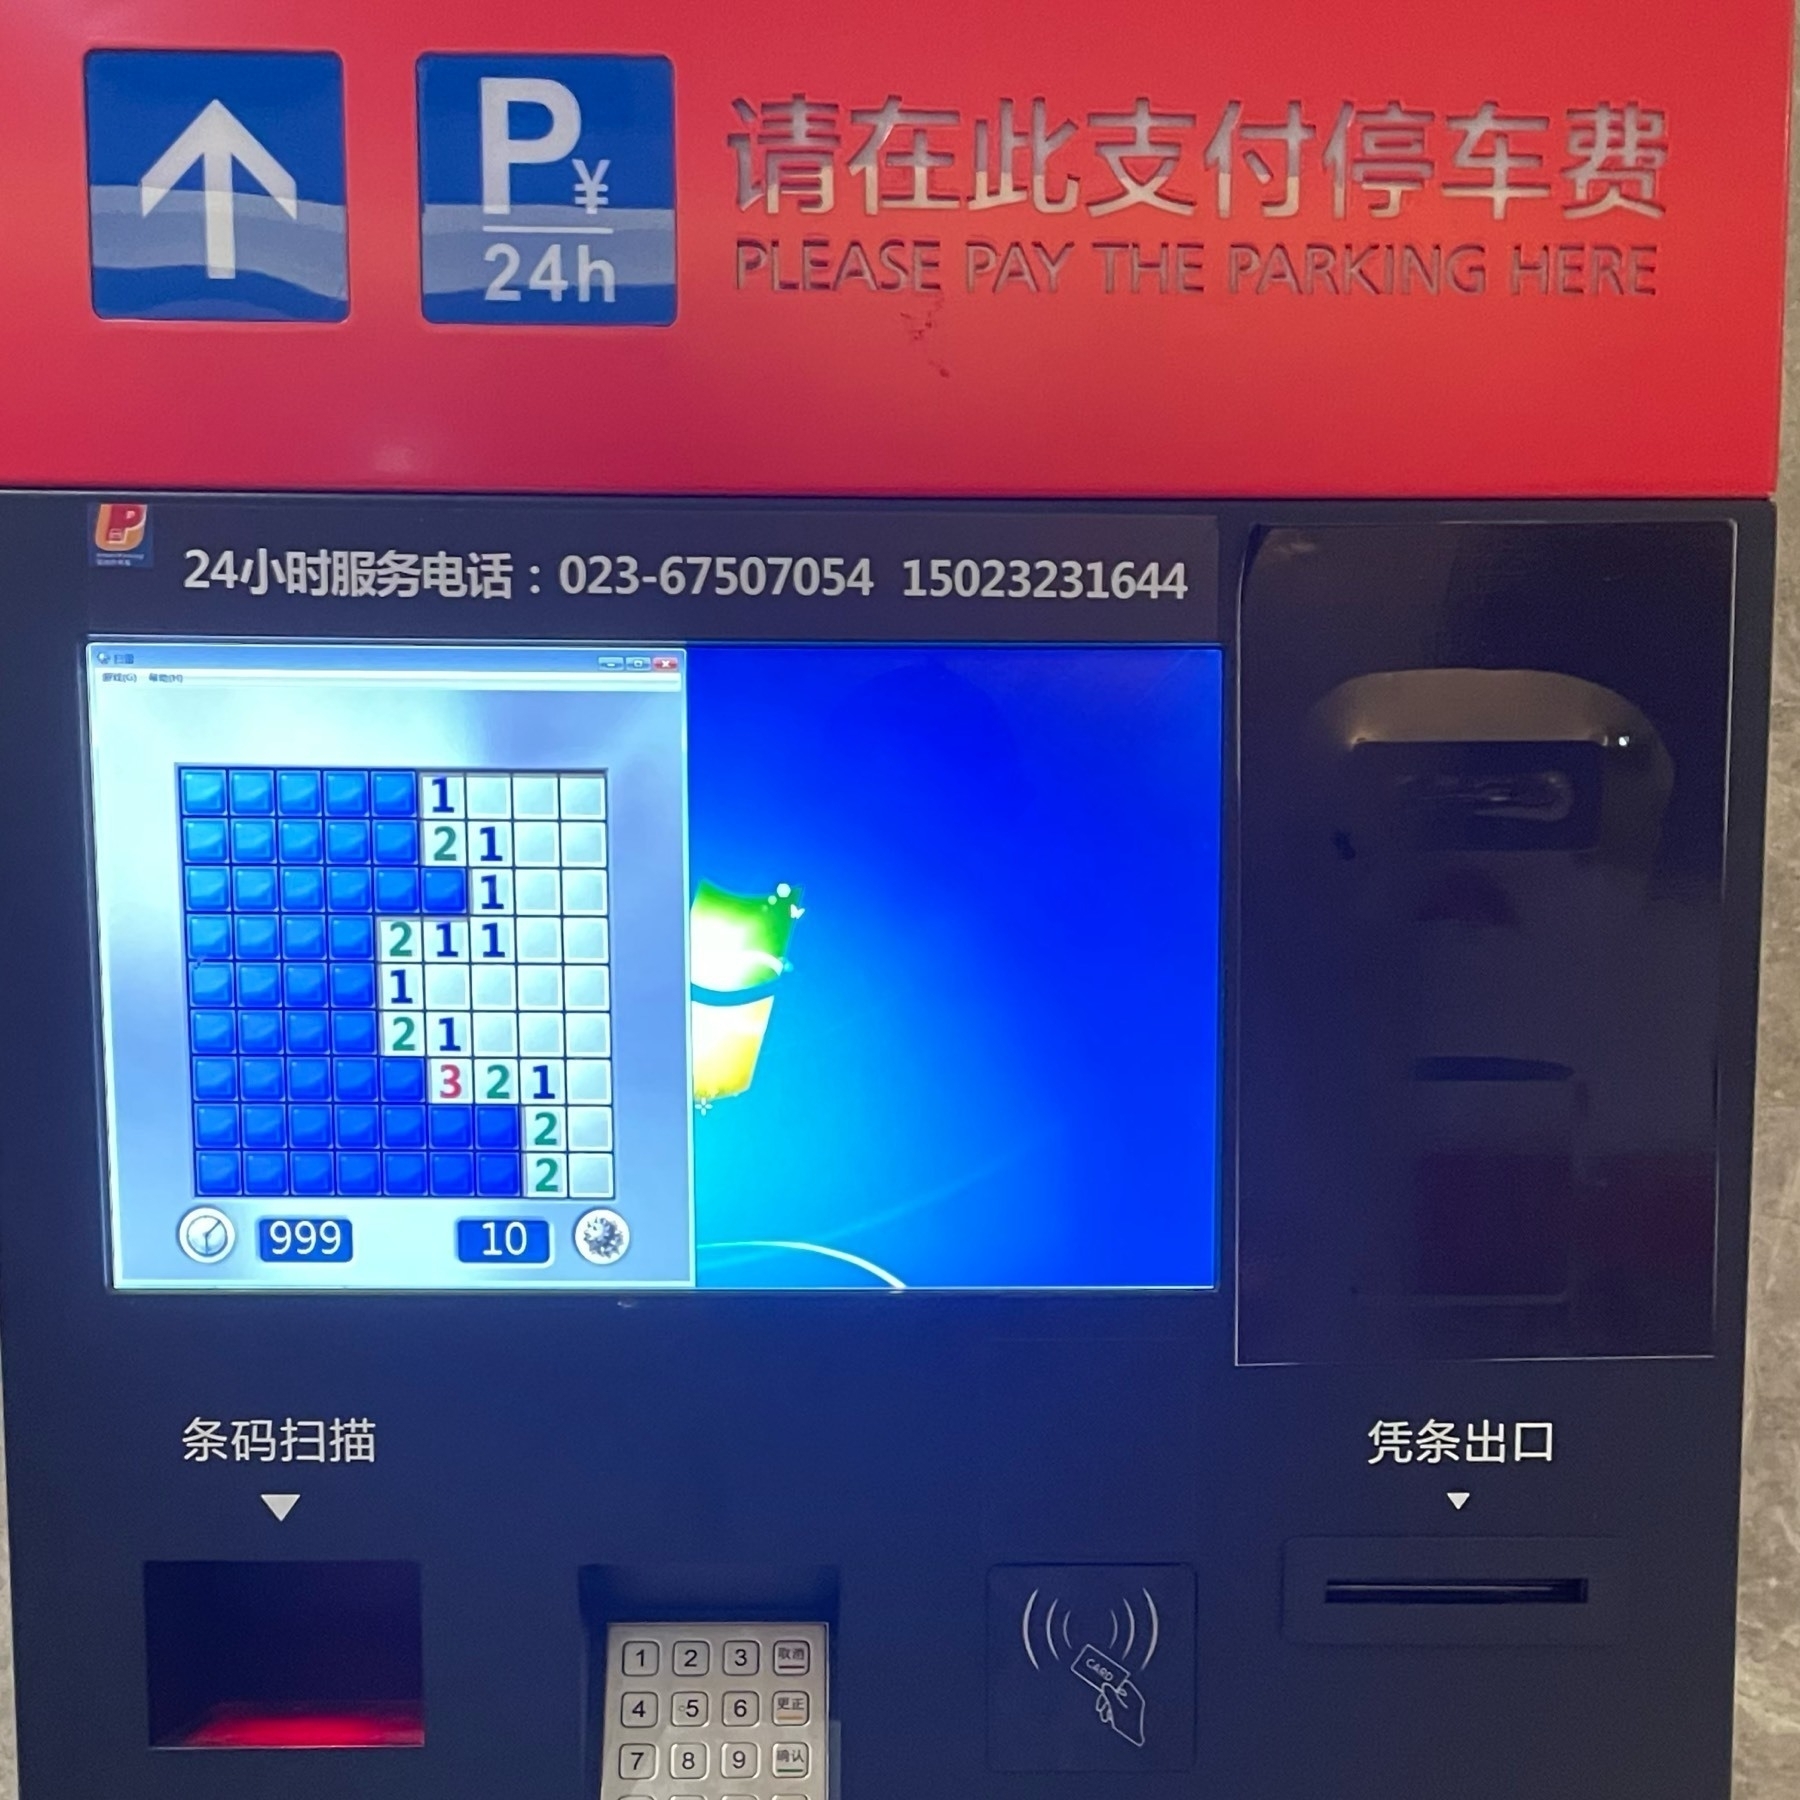 Ticket machine showing Minesweeper 